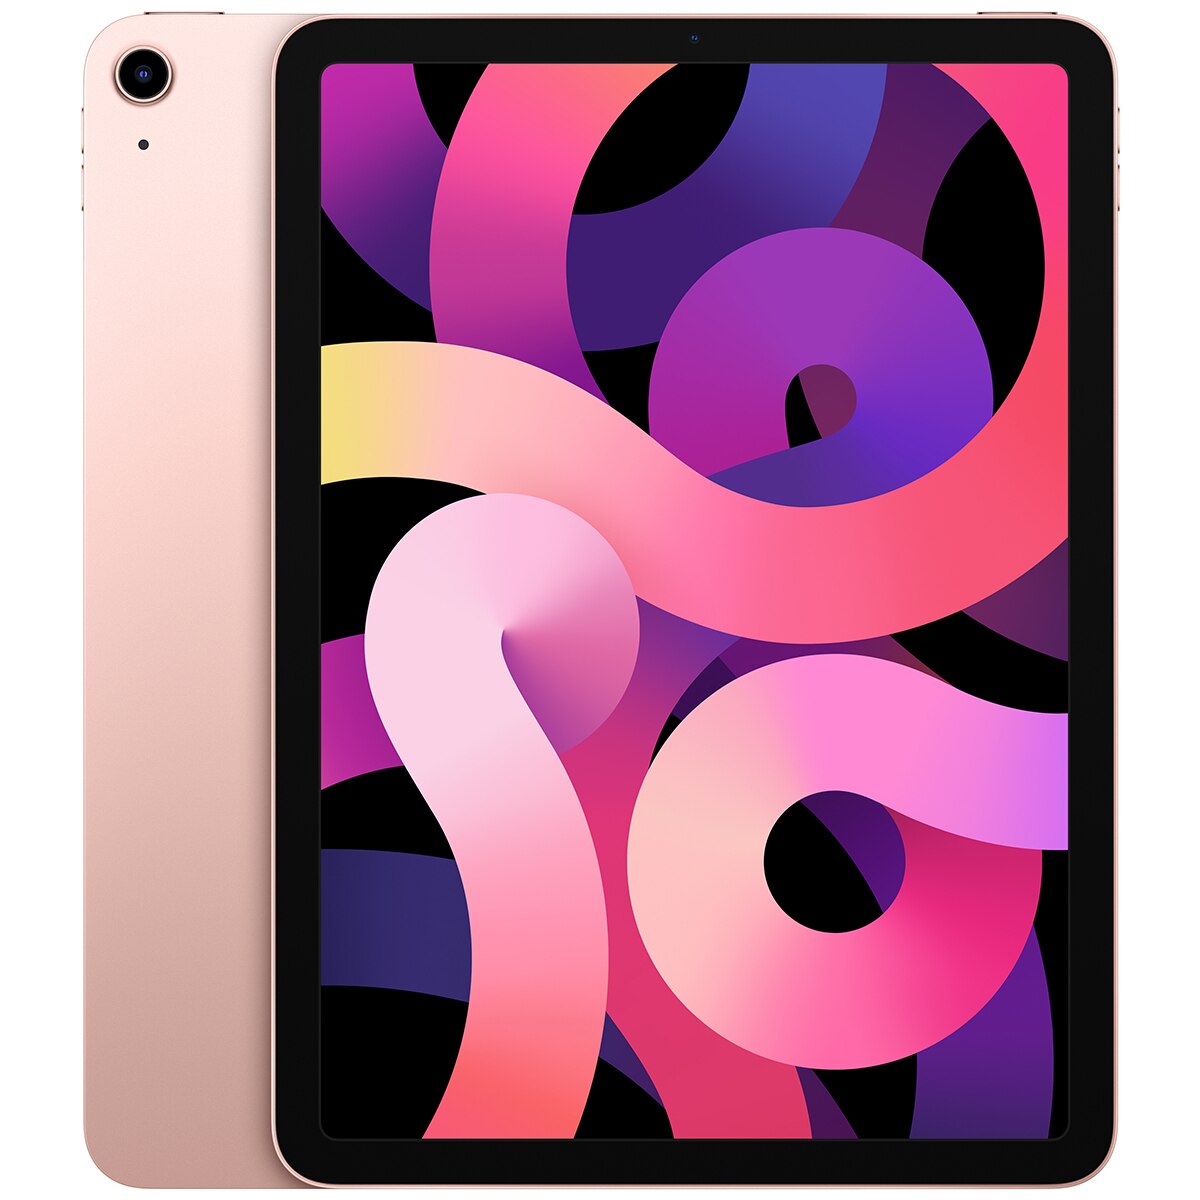 MYFP2XA 10.9-inch iPad Air Wi-Fi 64GB - Rose Gold